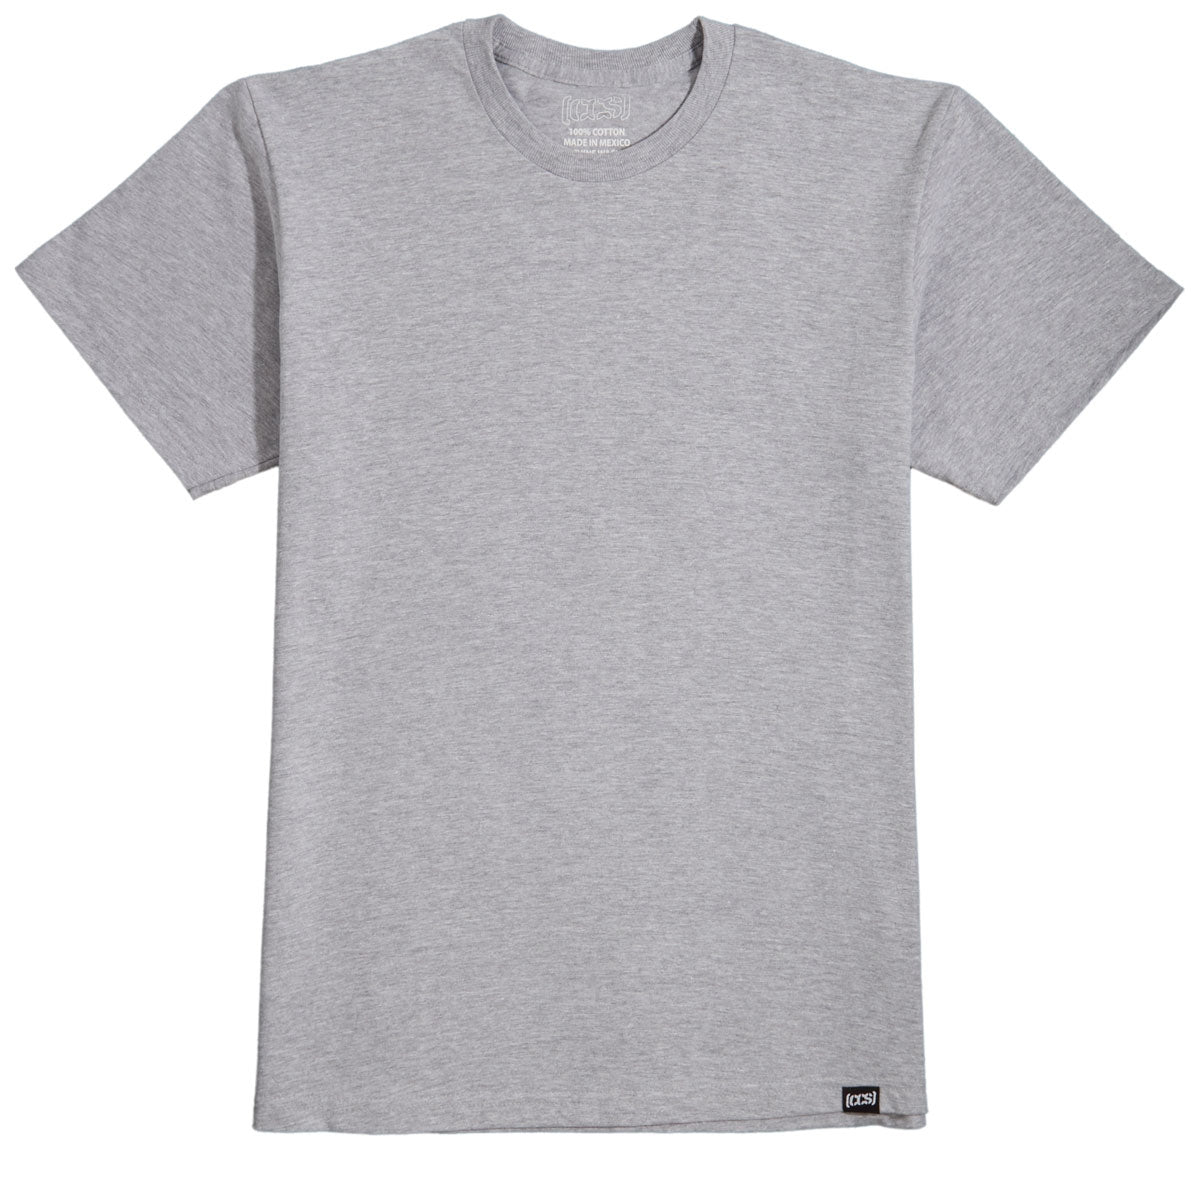 CCS Original Heavyweight T-Shirt - Grey image 1